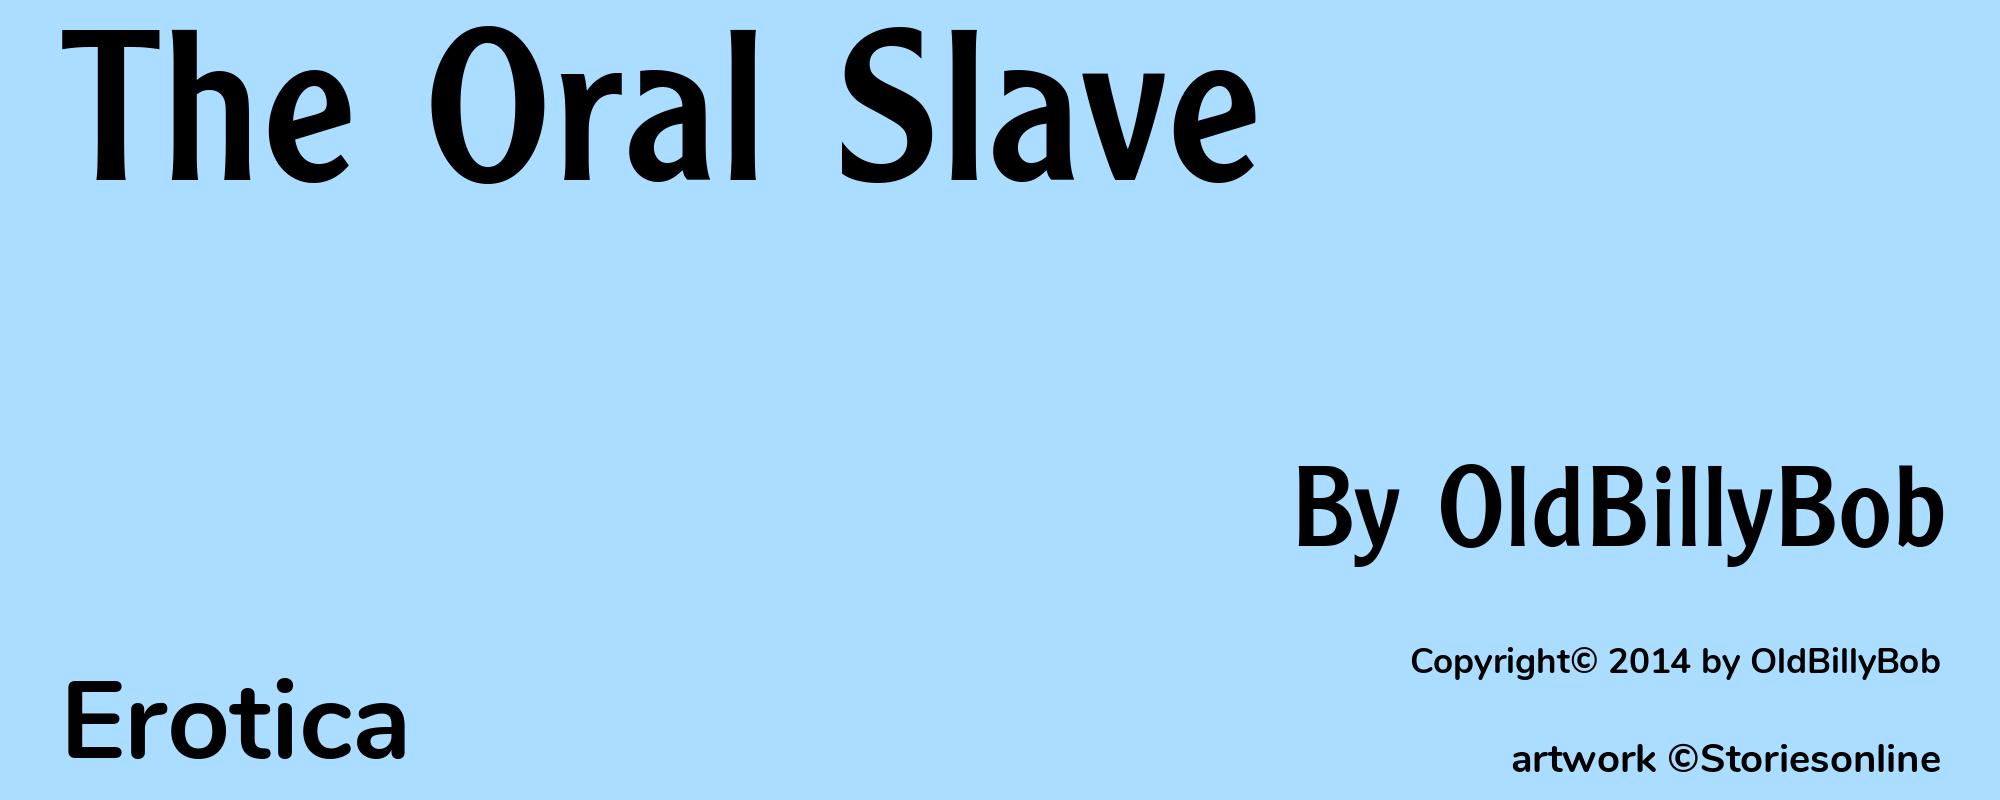 The Oral Slave - Cover